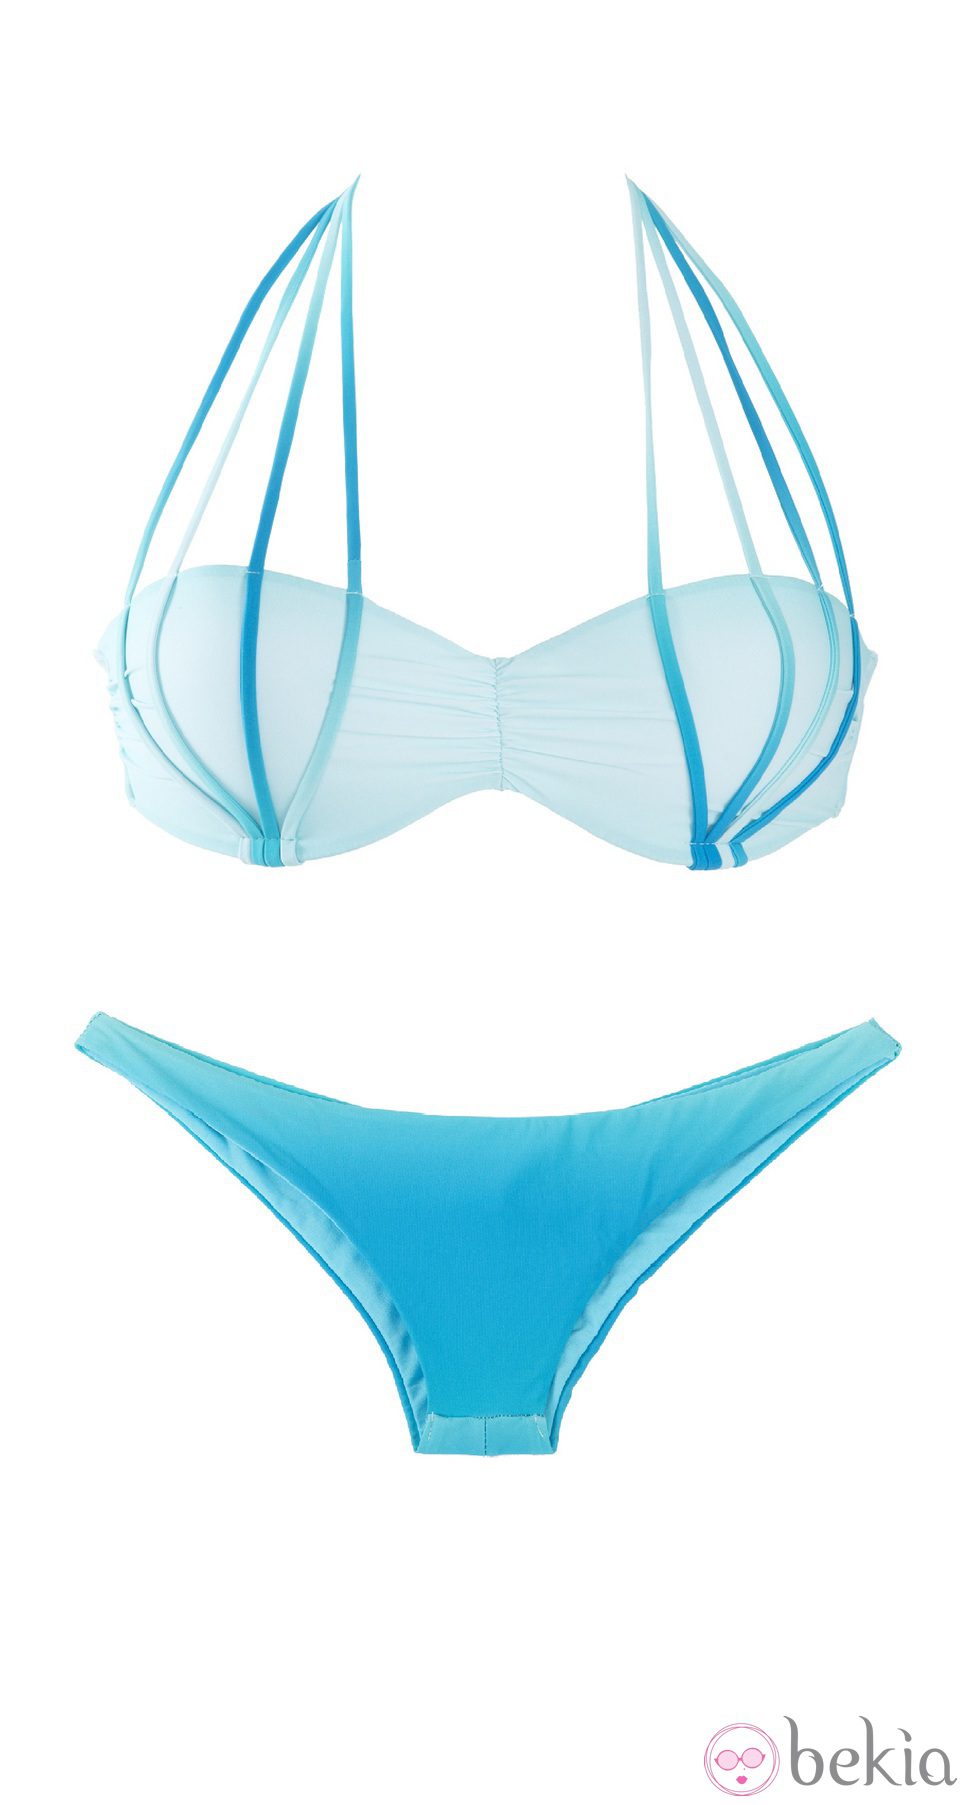 Bikini con tiras y efecto degradé en turquesa de OniricSwimwear para verano 2014